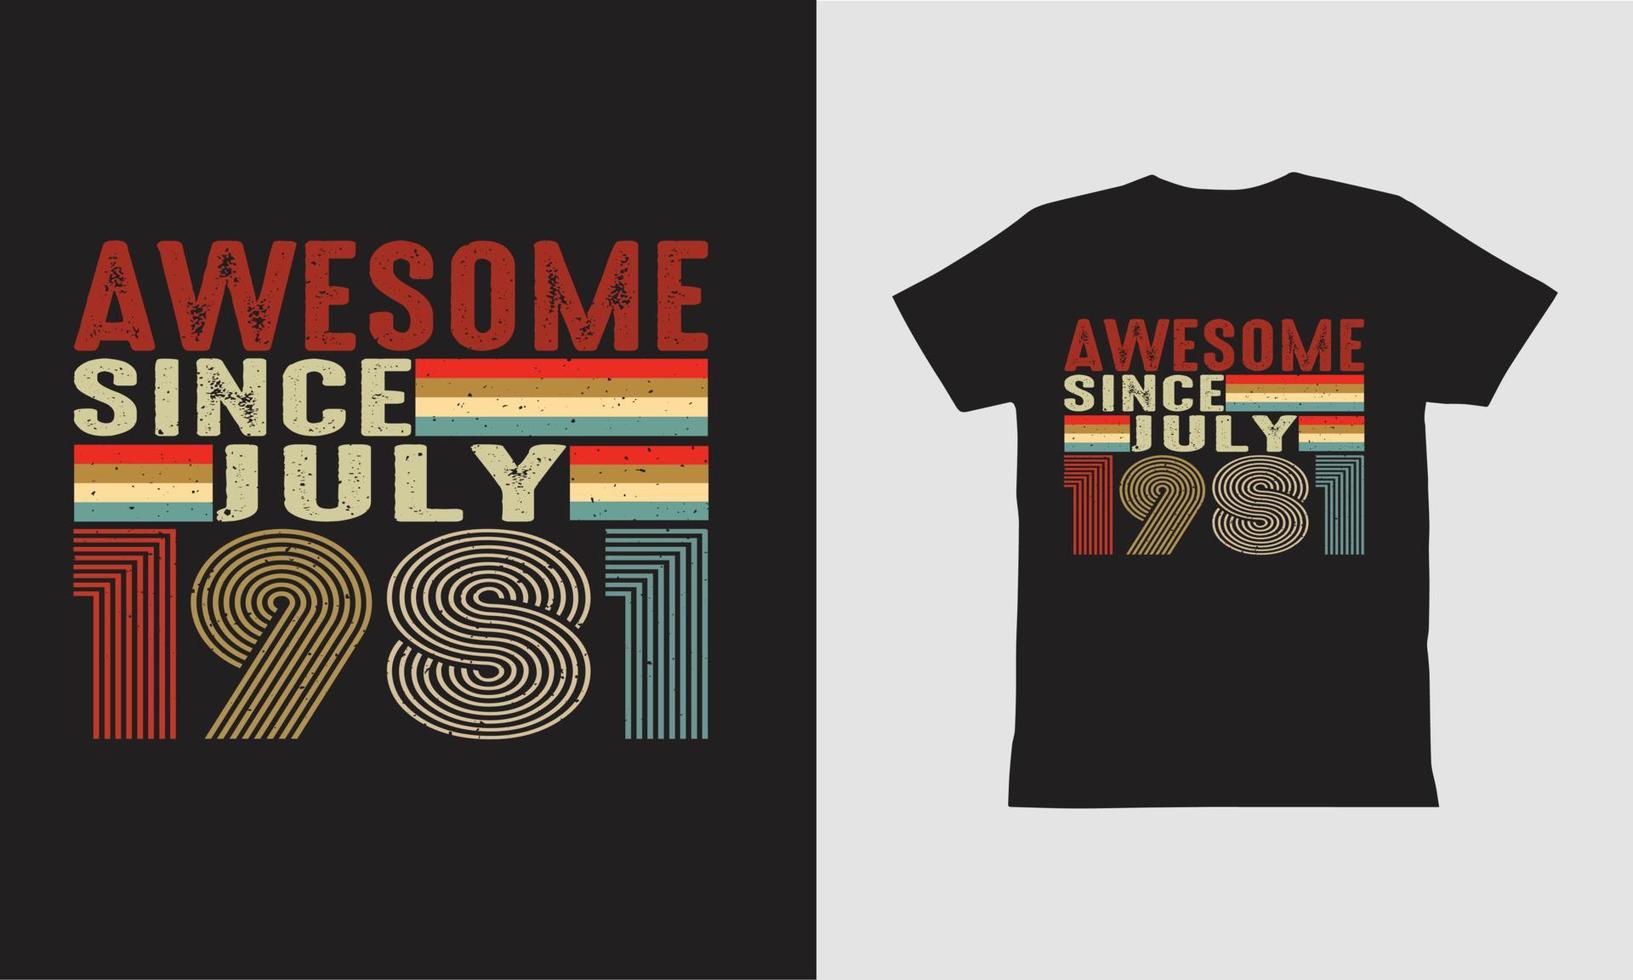 fantastisk sedan juli 1981 t-shirt design. vektor